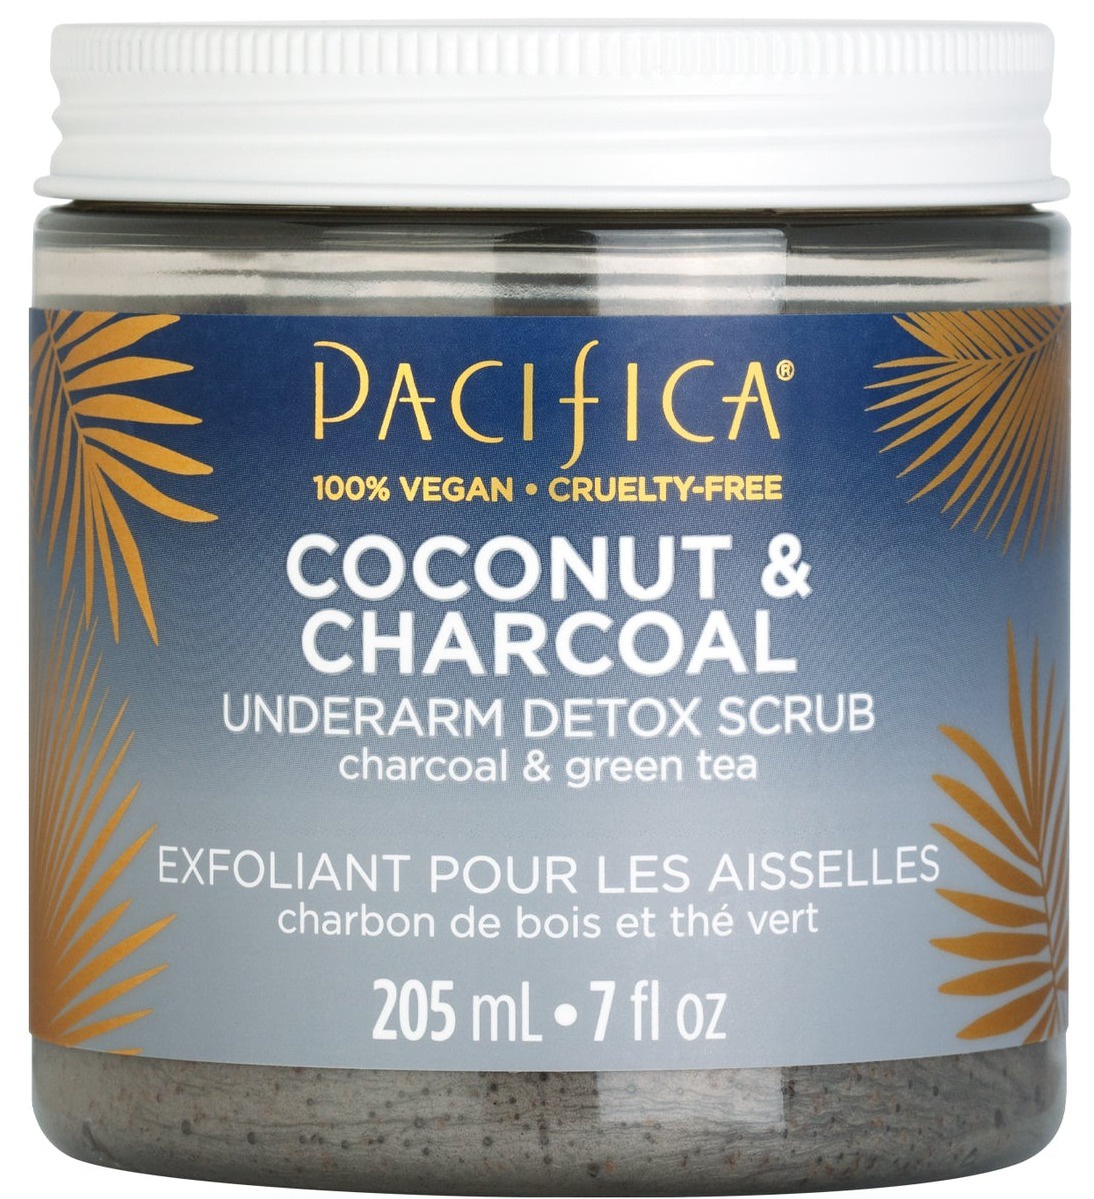 Pacifica Coconut & Charcoal, Underarm Detox Scrub